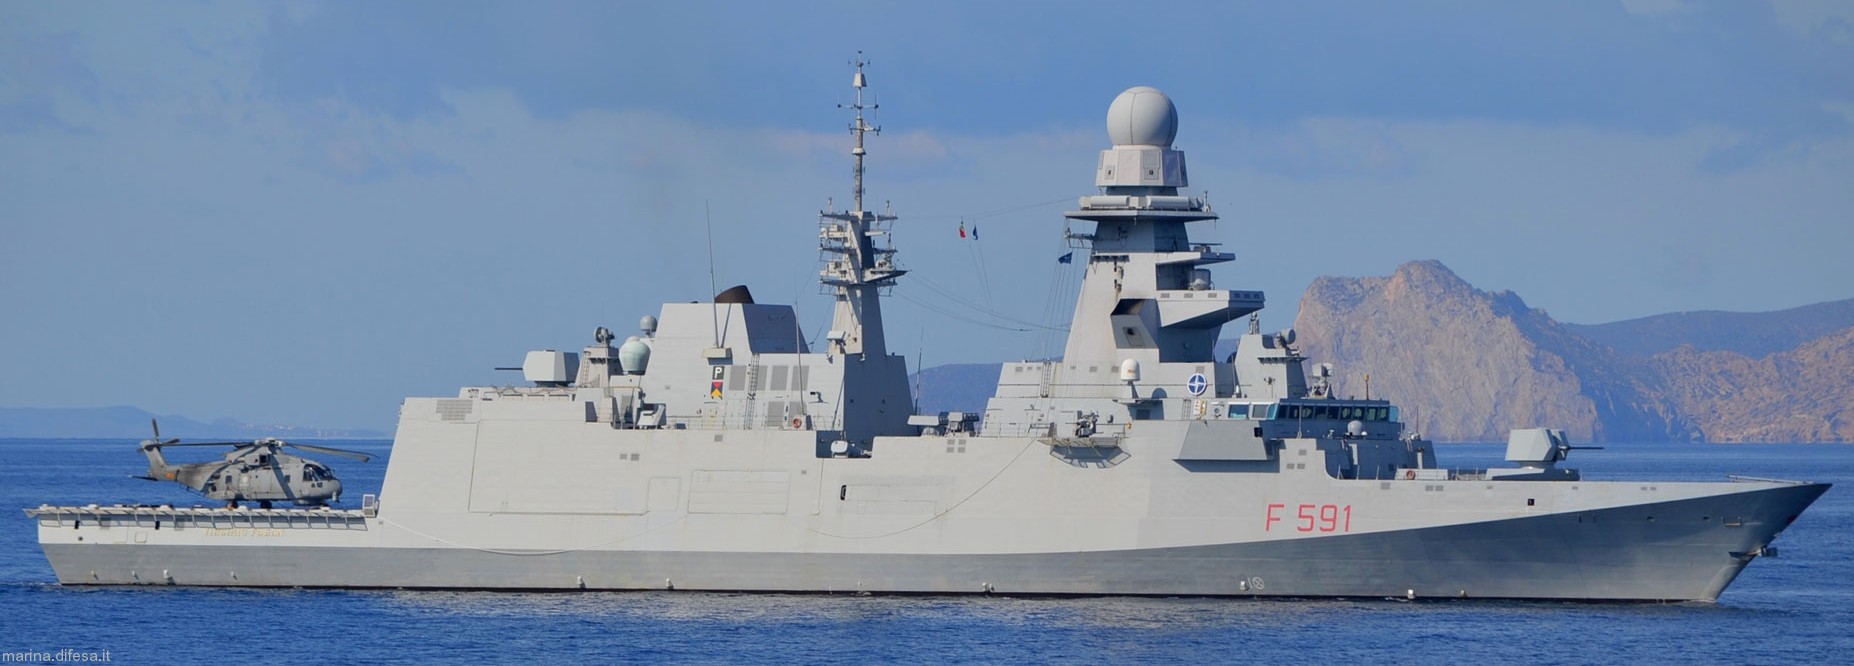 f-591 virginio fasan its nave bergamini fremm class guided missile frigate italian navy marina militare 52